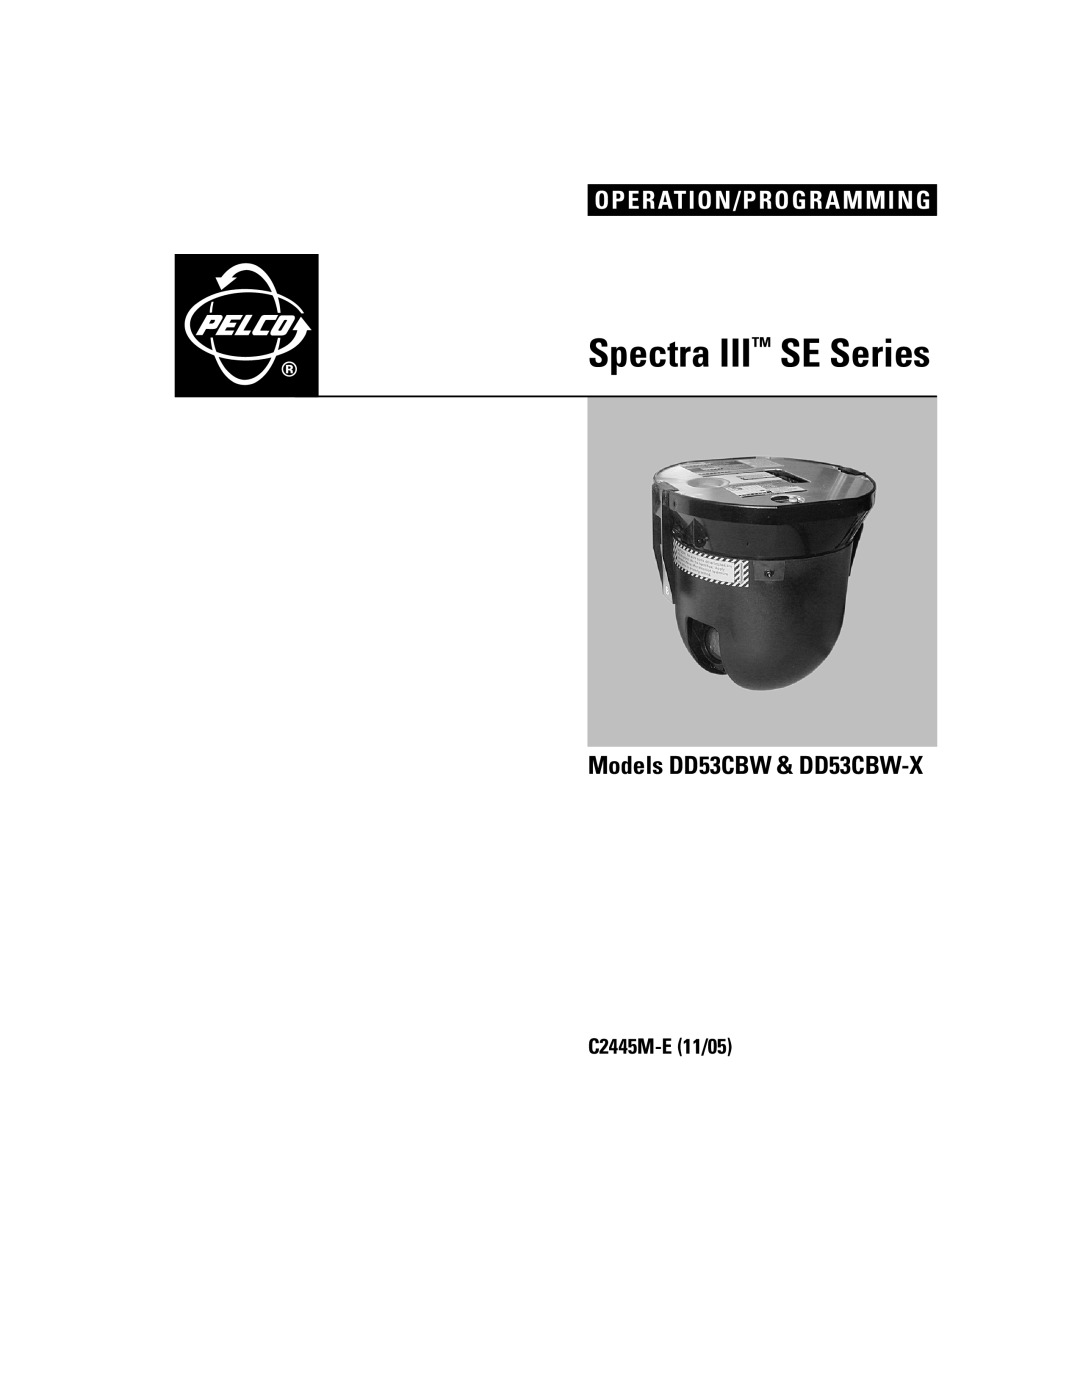 Pelco manual Operation/Programming, Models DD53CBW & DD53CBW-X, Spectra III SE Series, C2445M-E11/05 